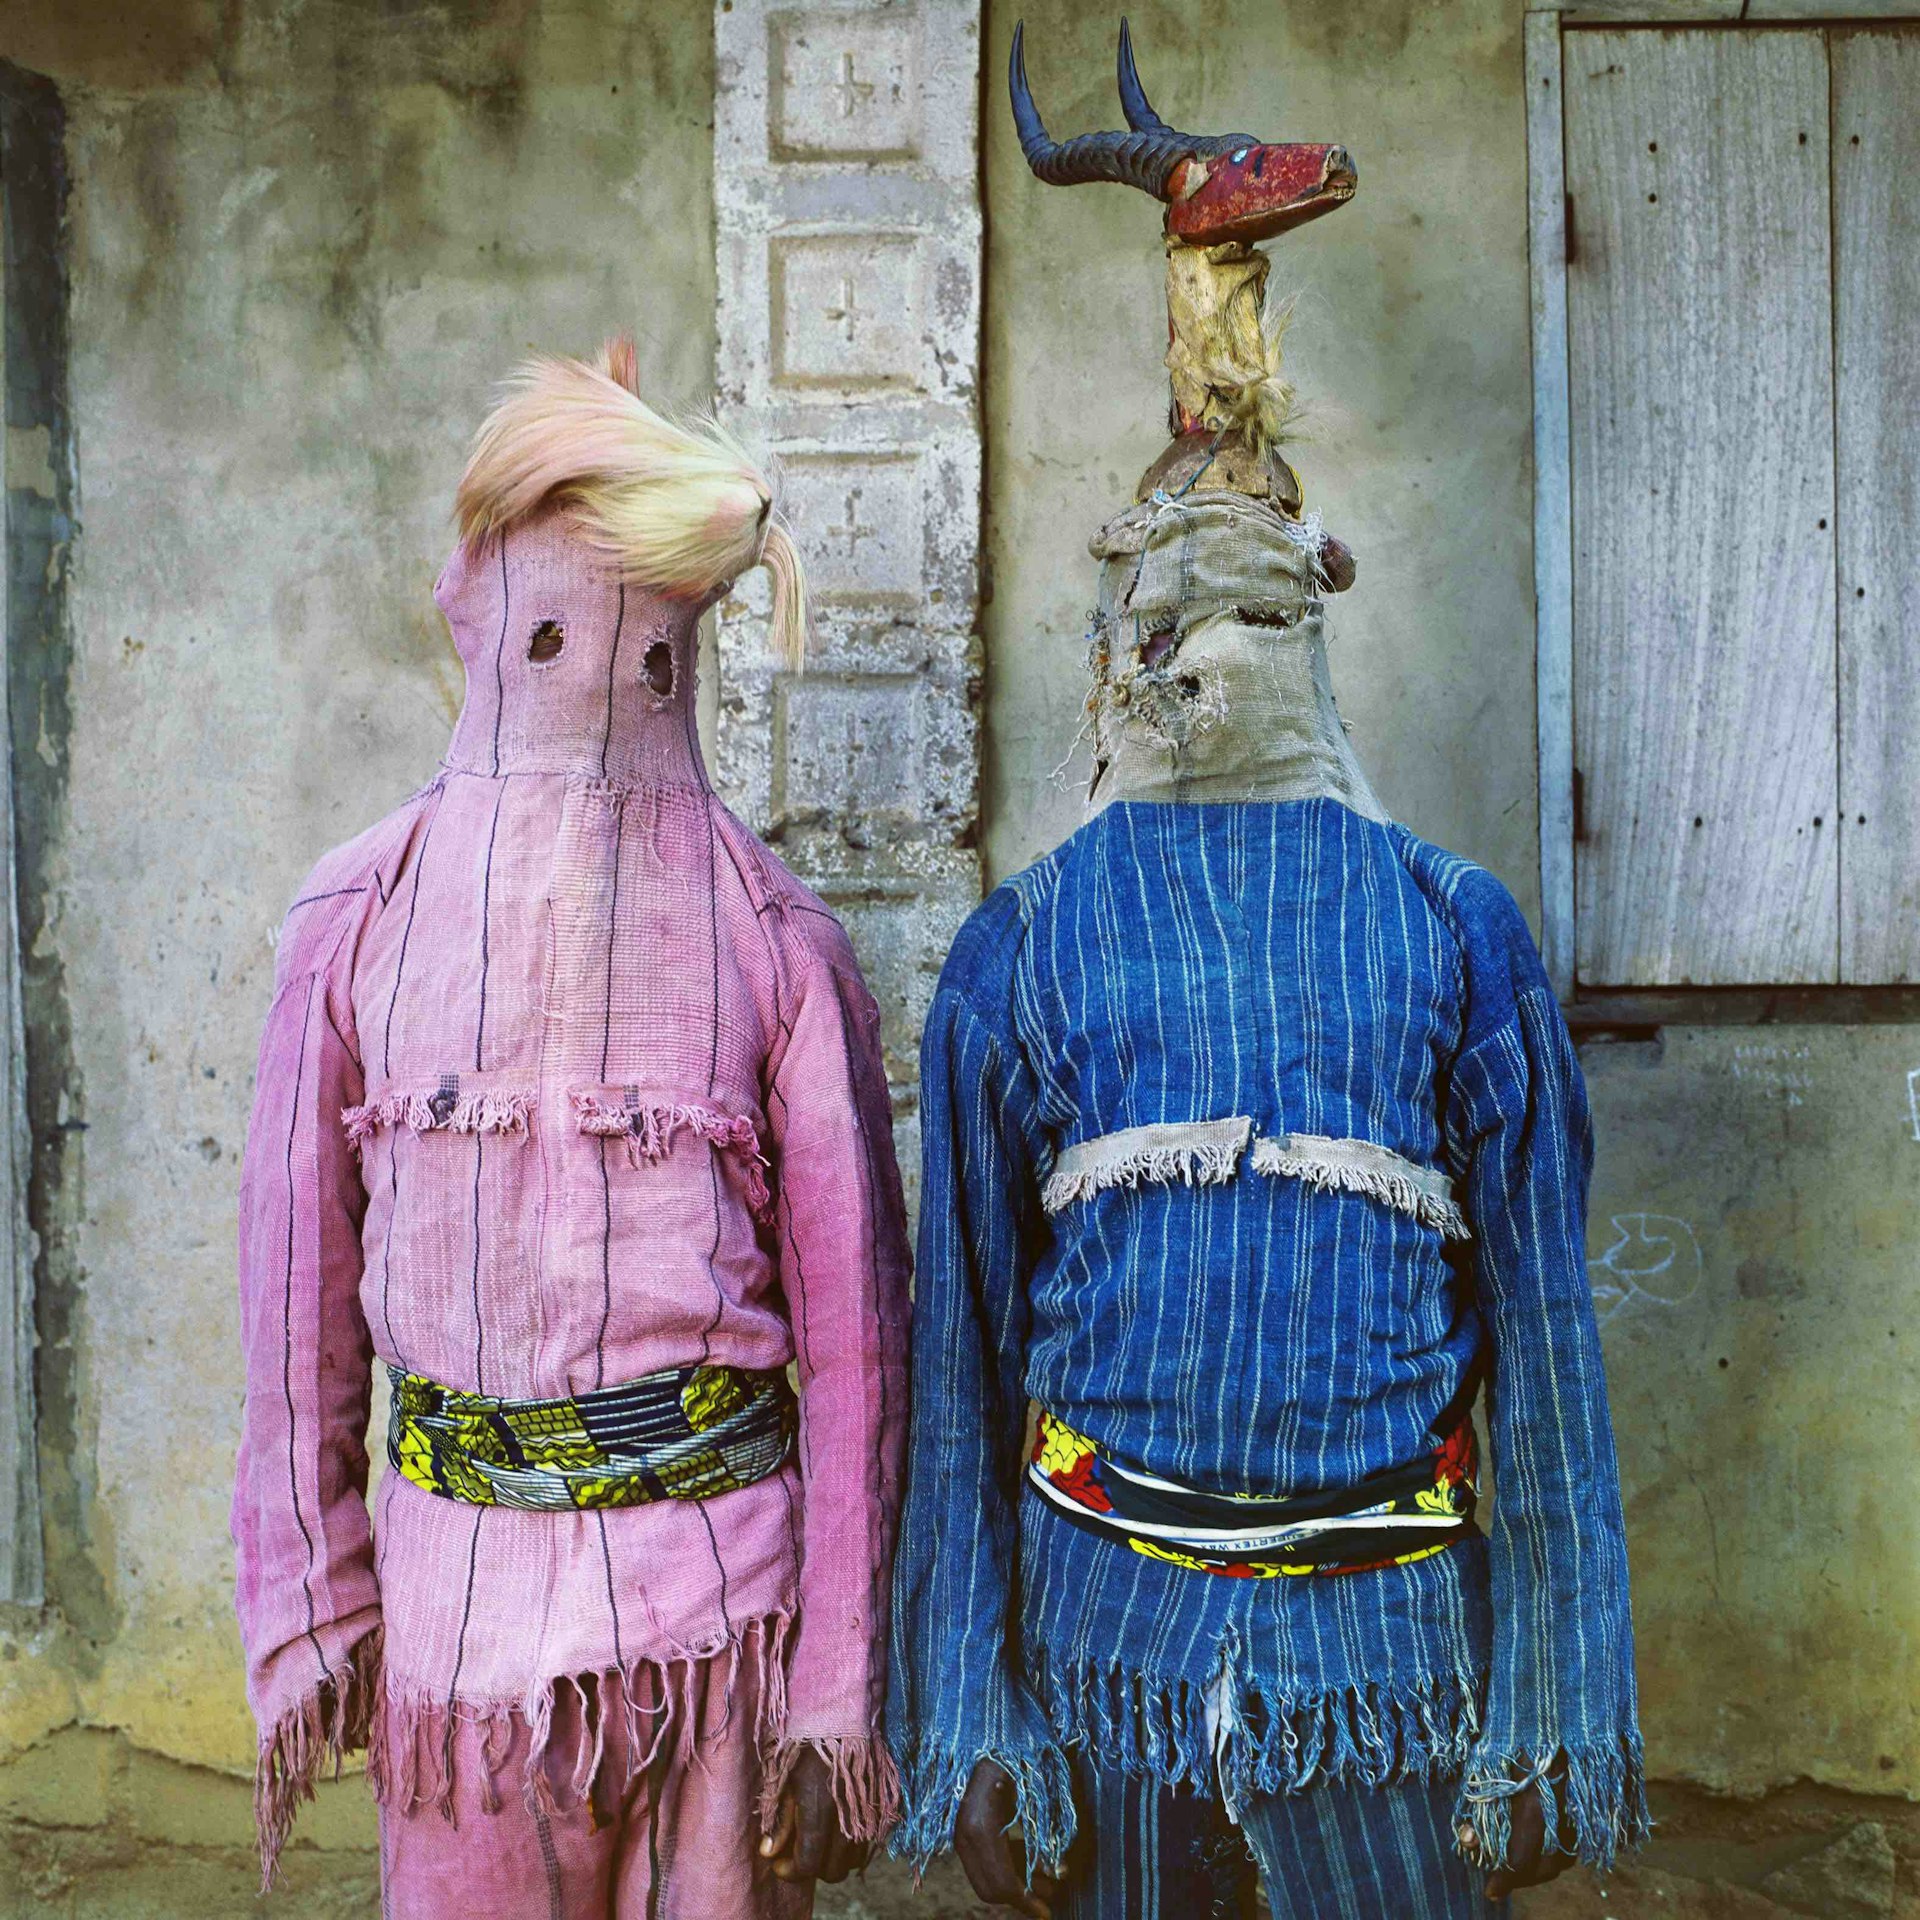 Akata Masquerade. Nigeria. 2004 © Phyllis Galembo courtesy Aperture